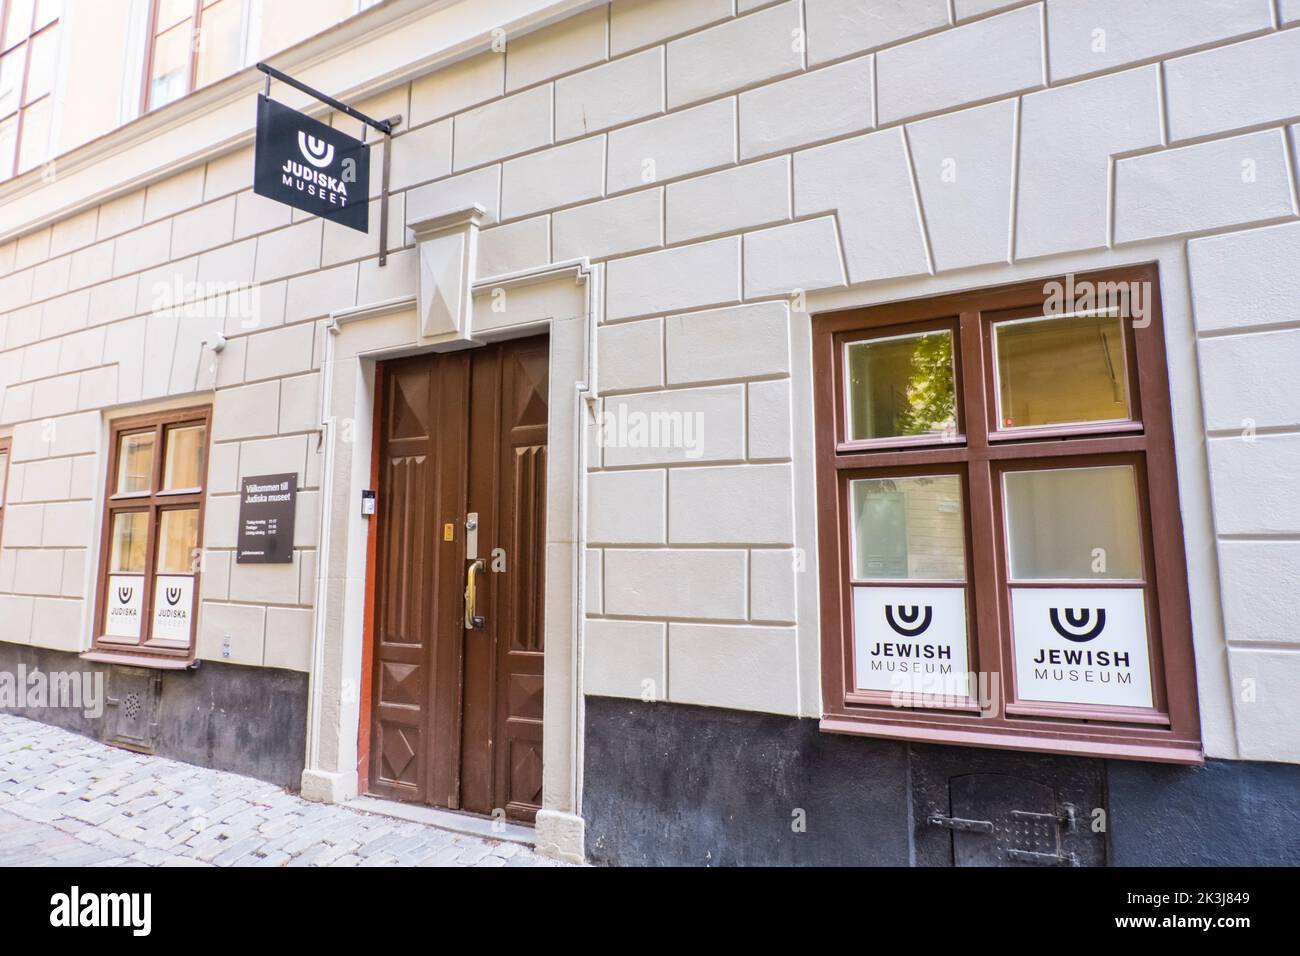 Judiska museet, musée juif, Gamla stan, Stockholm, Suède Banque D'Images